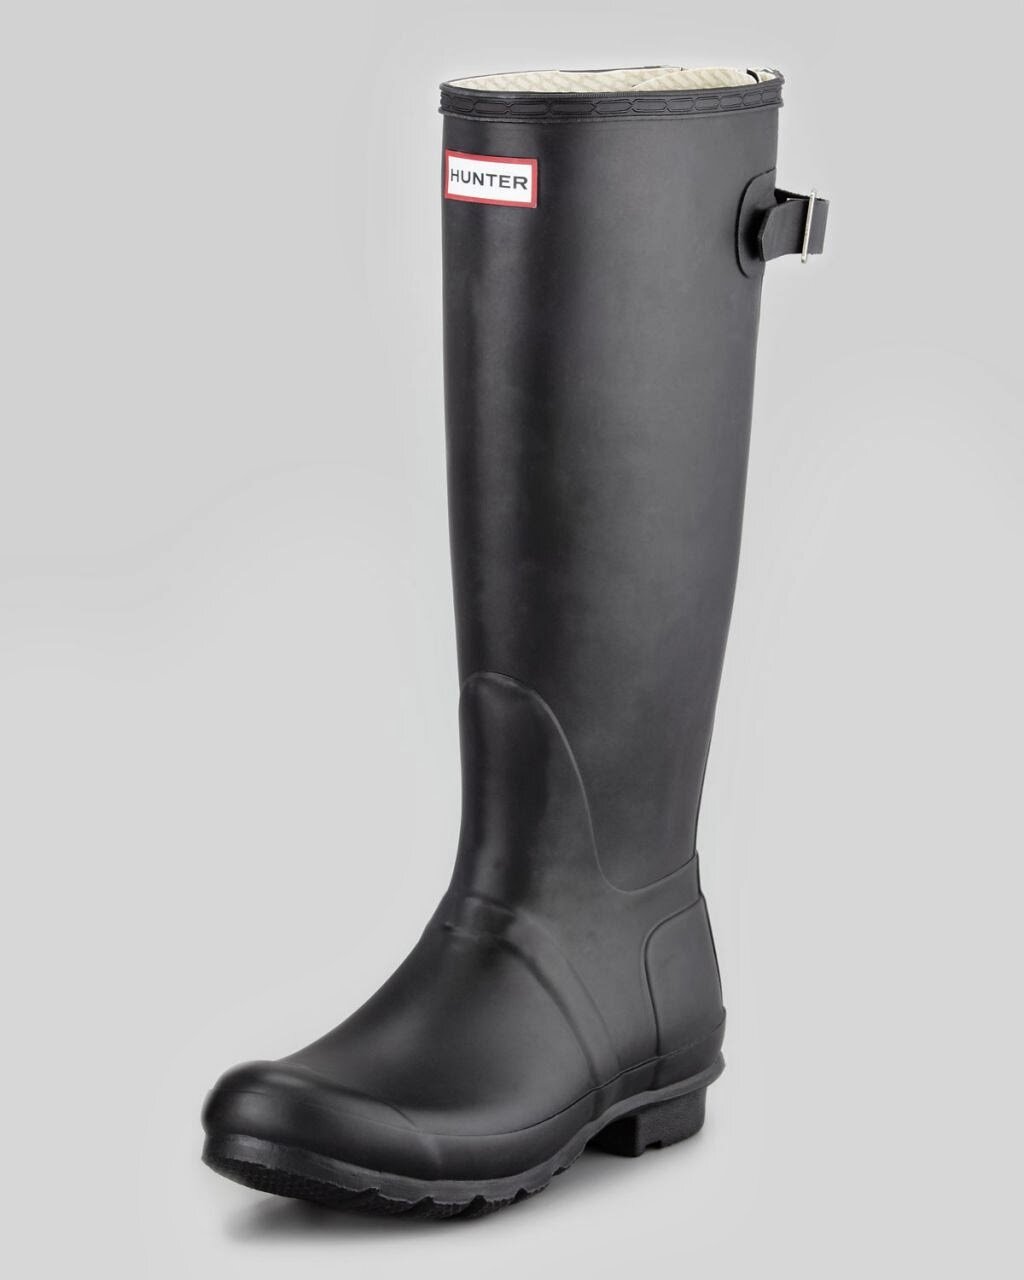 Hunter Original Tall Rain Boots — The 